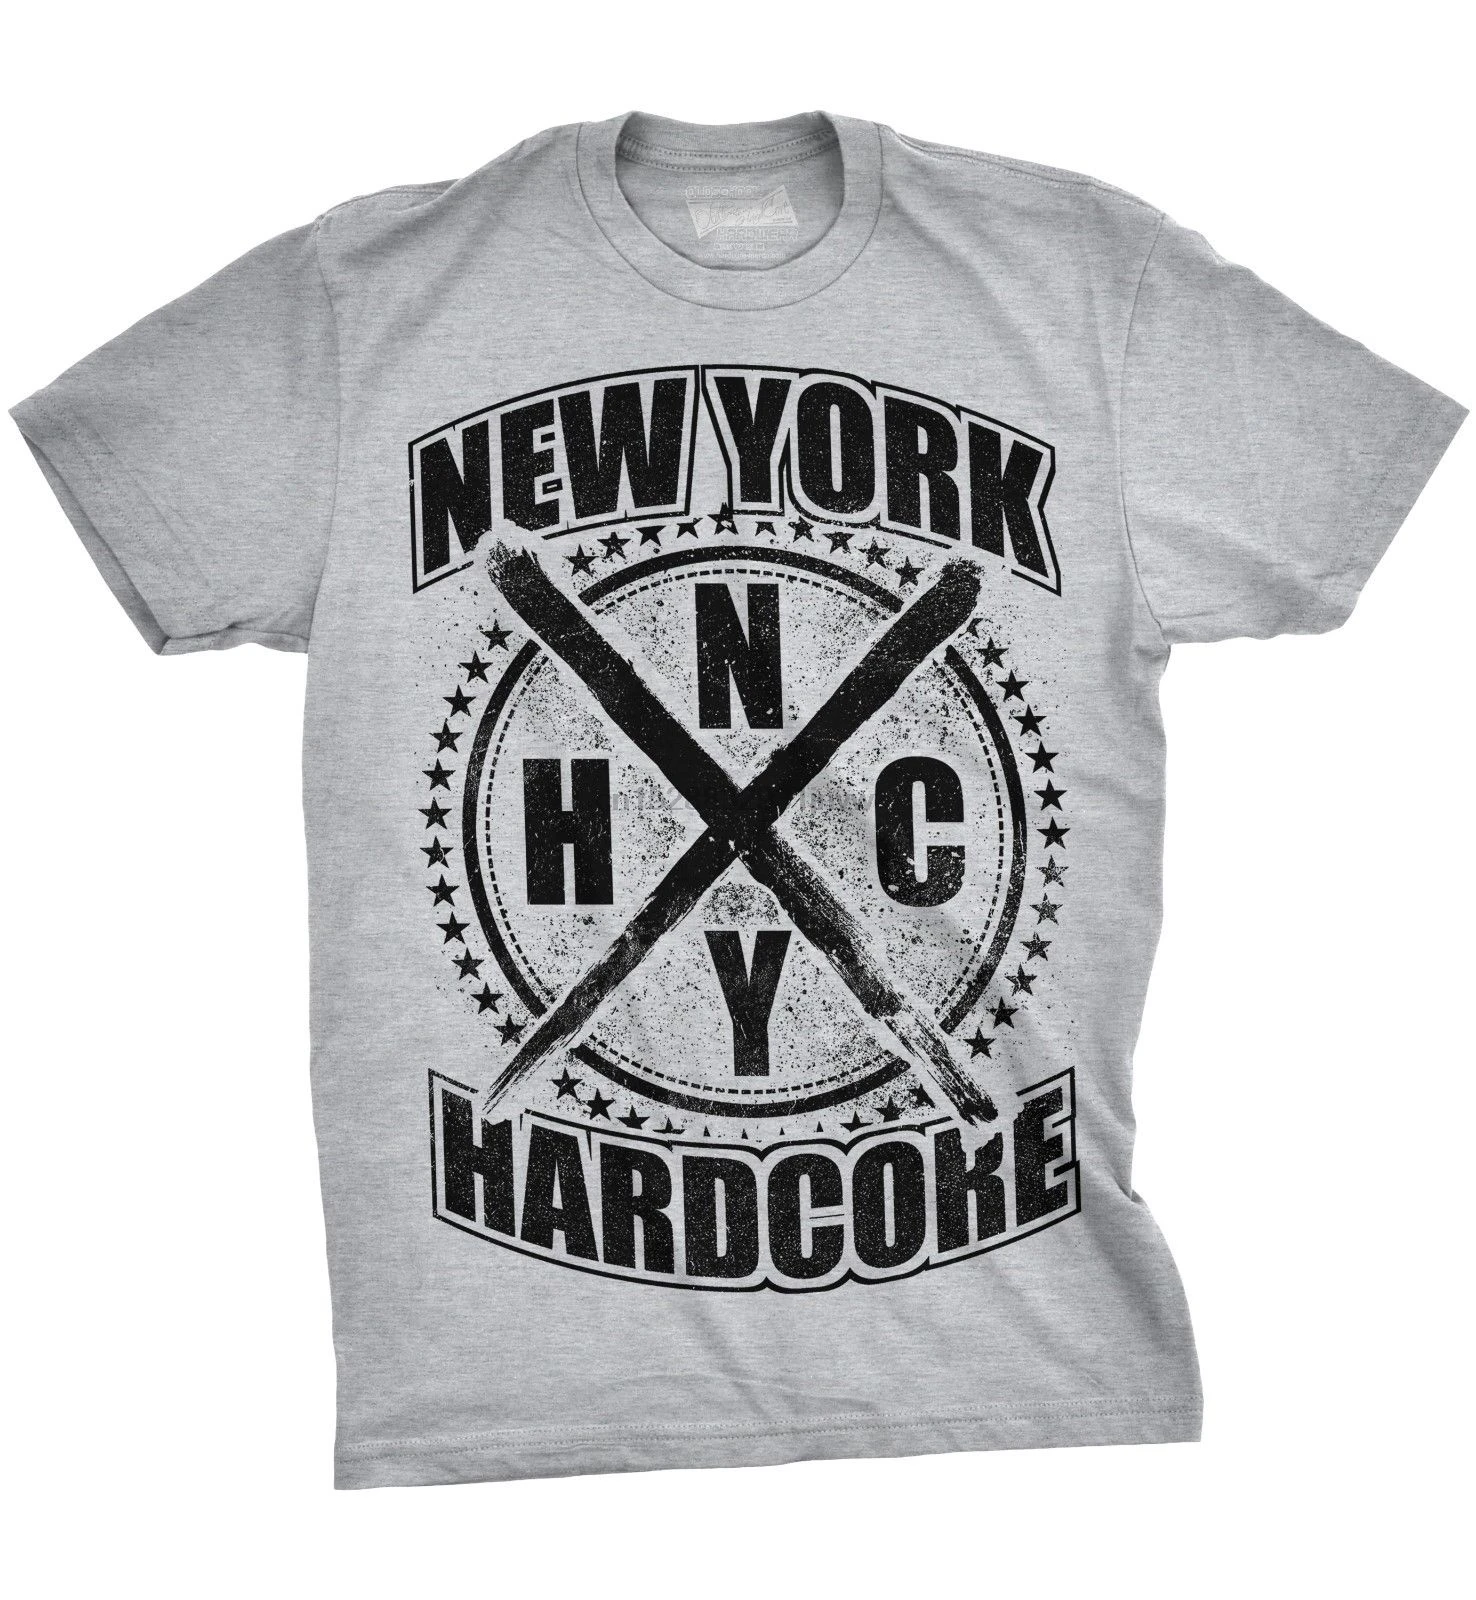 

New York Hardcore Cross T-Shirt Heathergray S-3Xl Nyhc Agnostic Front Madball Men Cotton T-Shirt Printed T Shirt Top Tee